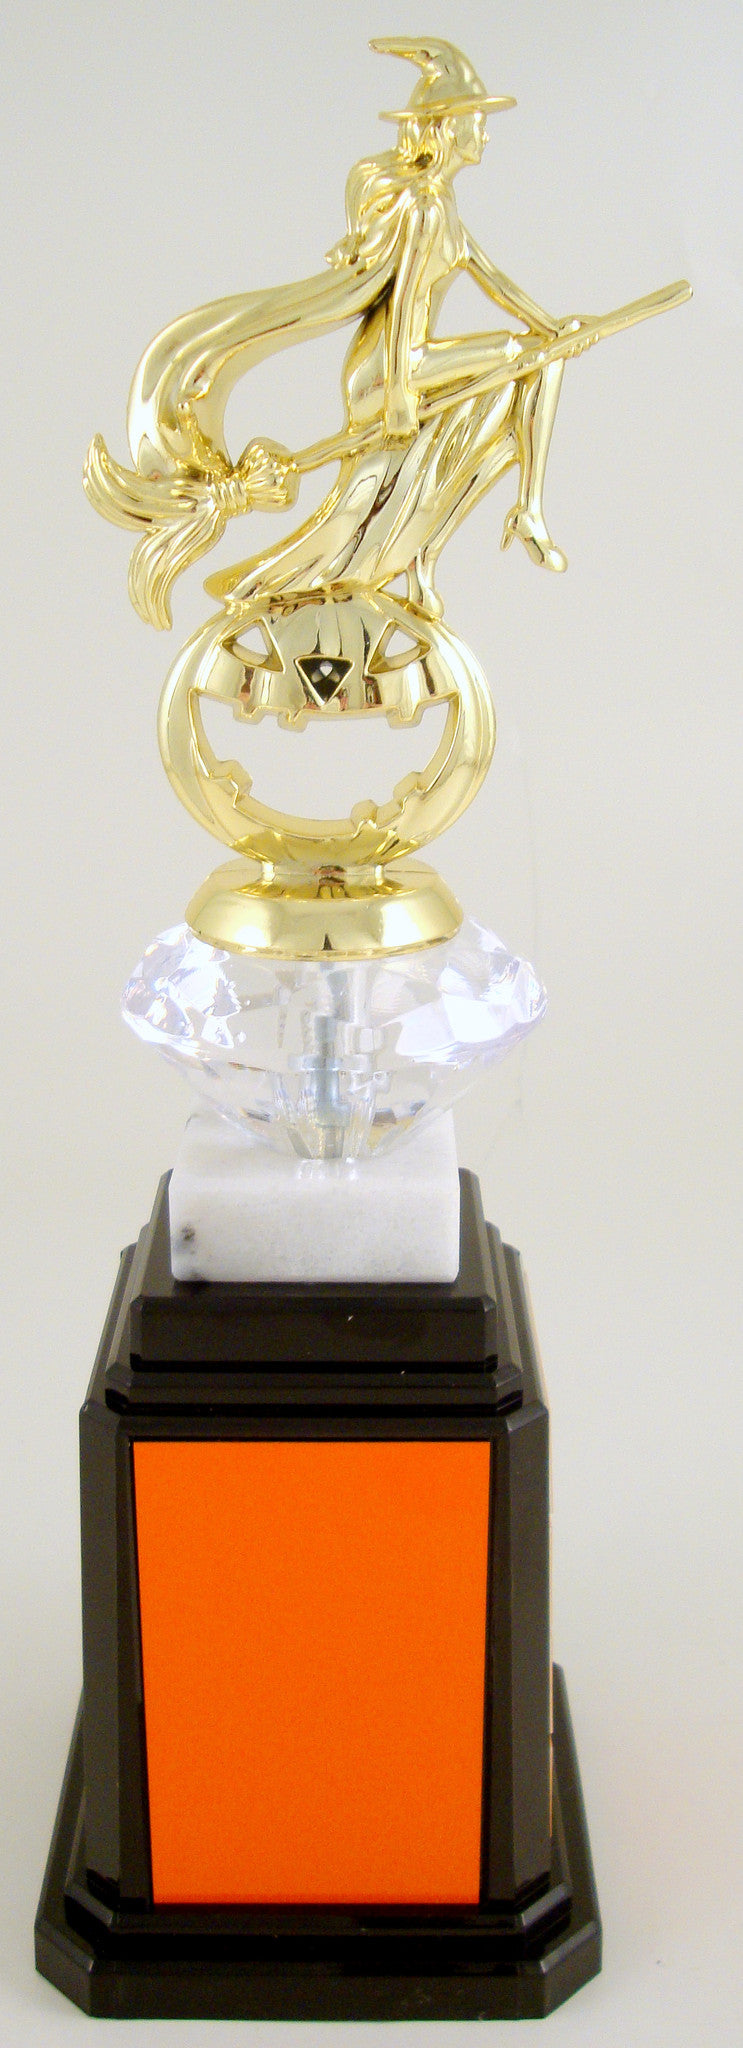 Halloween Trophy With Diamond Riser On Tower Base-Trophy-Schoppy&